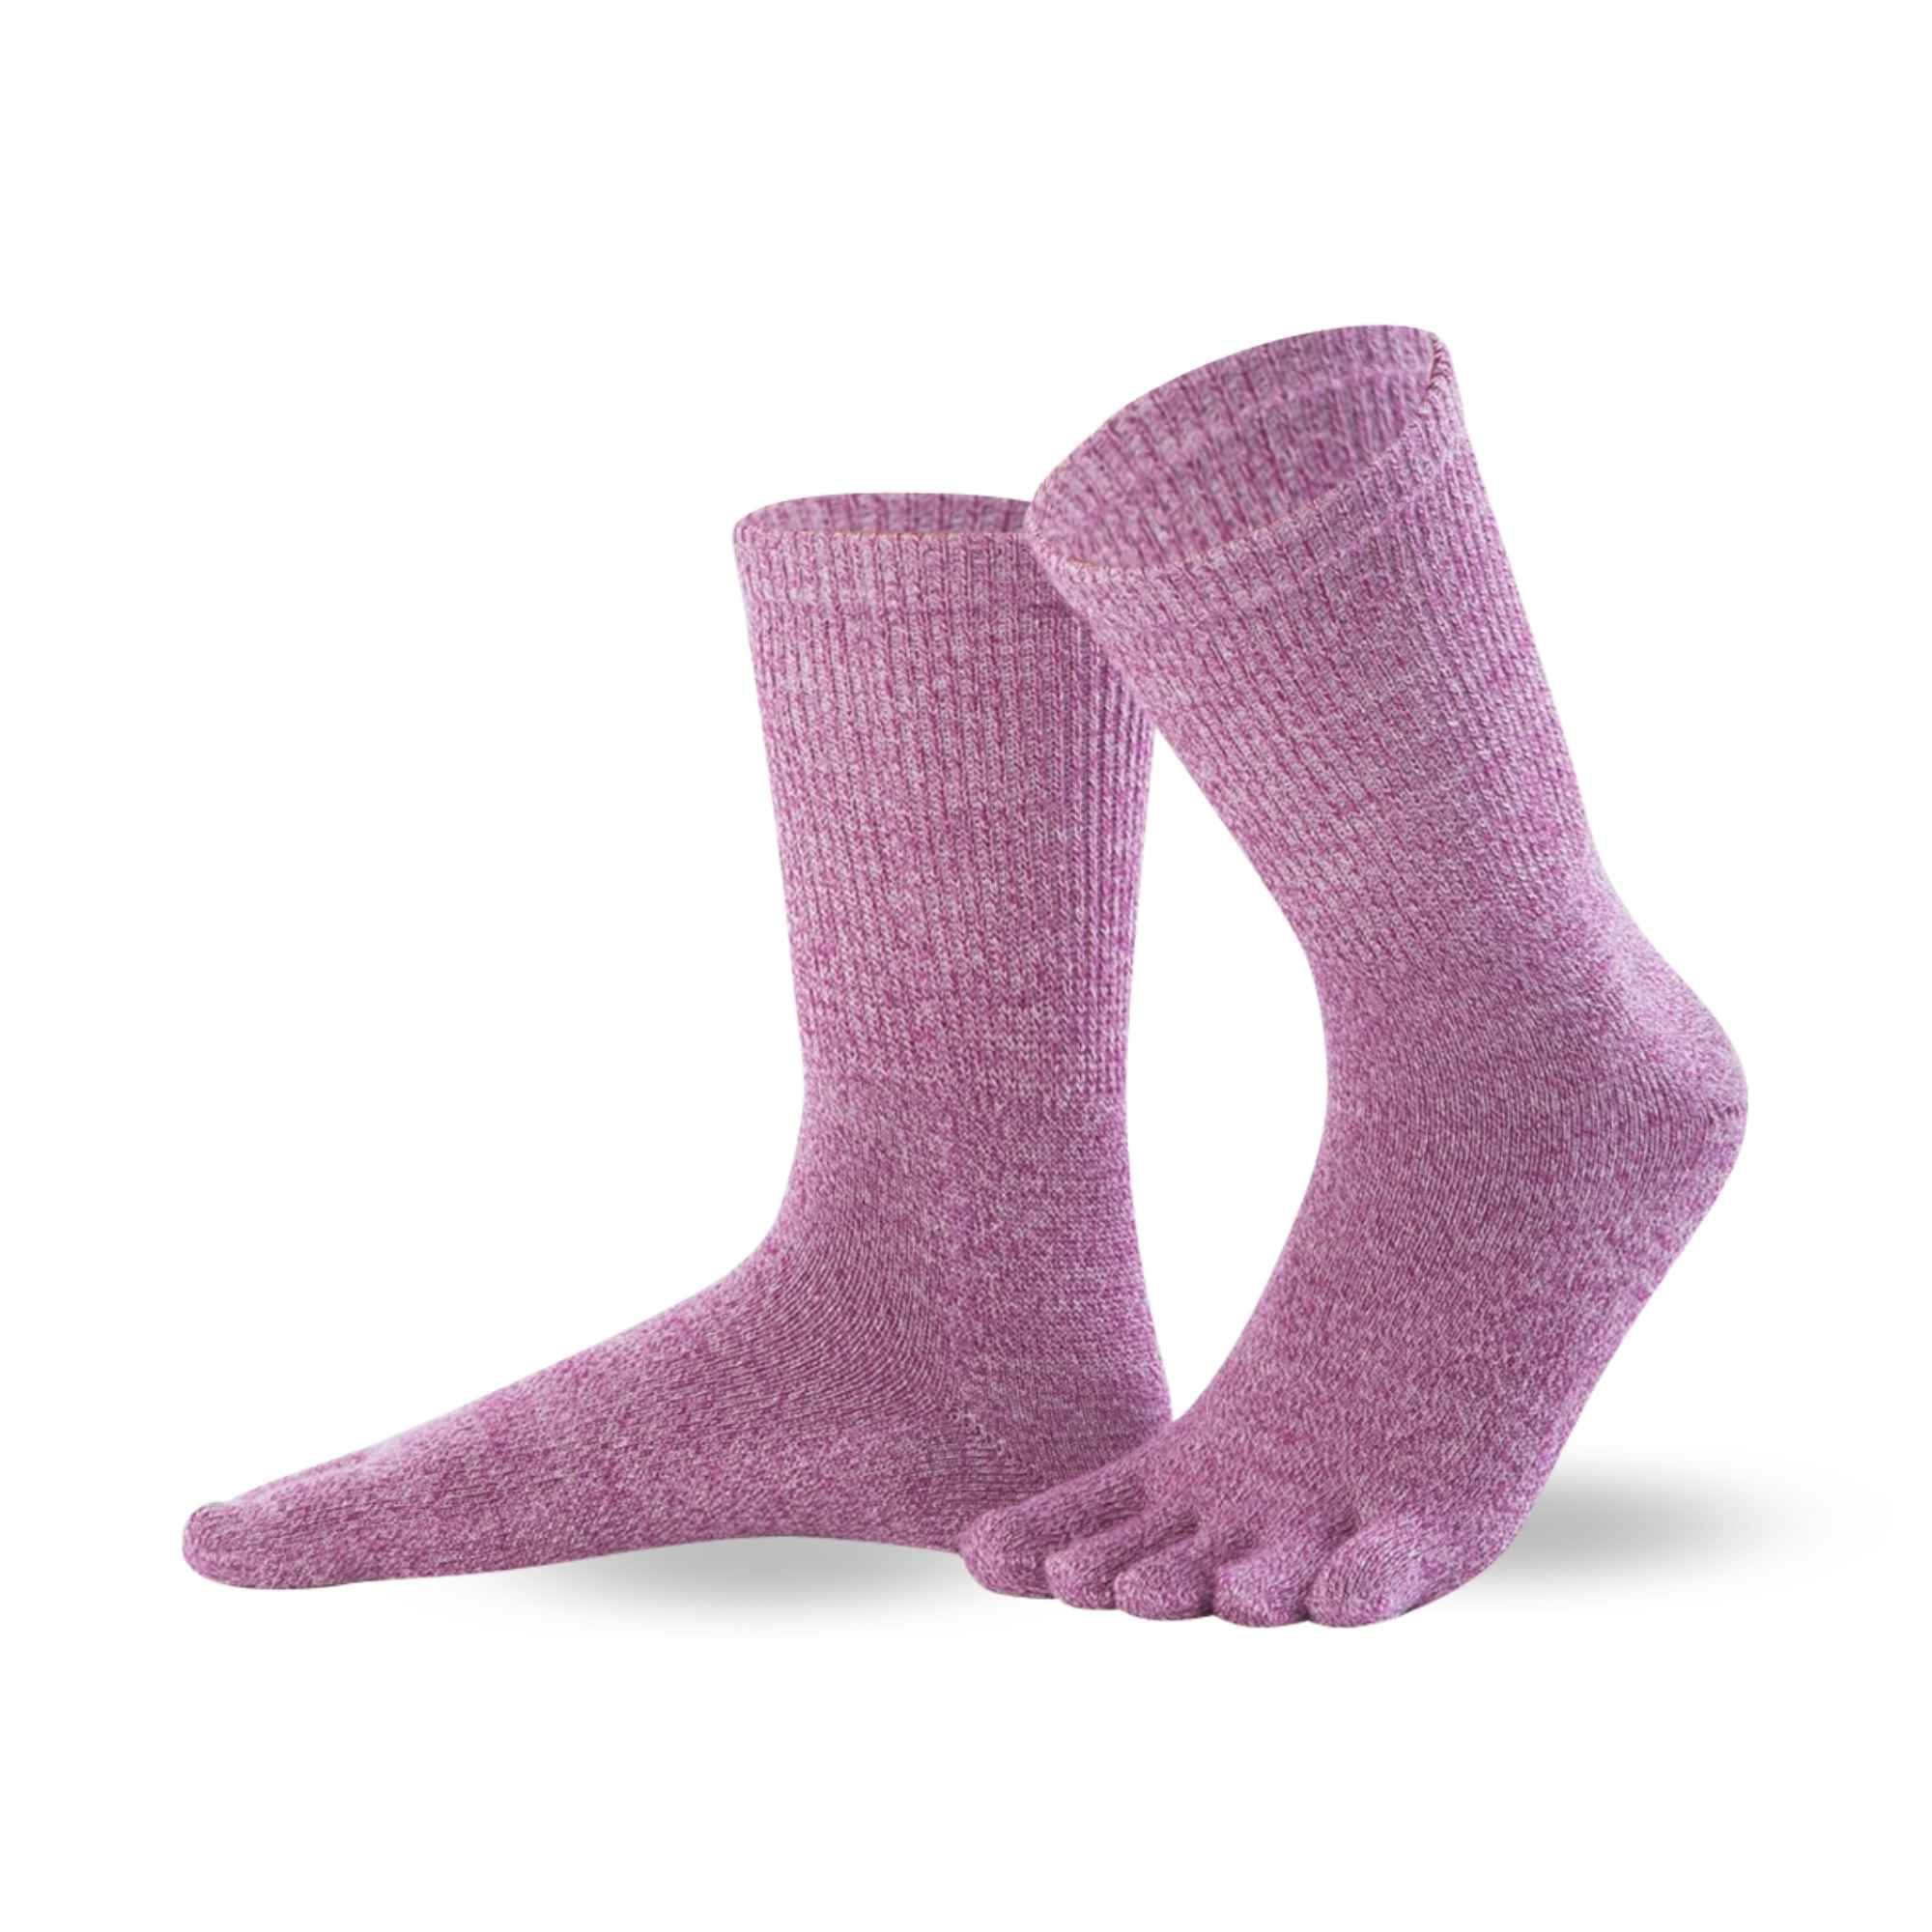 Knitido Mérinos Optimo chaussettes à orteils en laine mérinos - Knitido®.